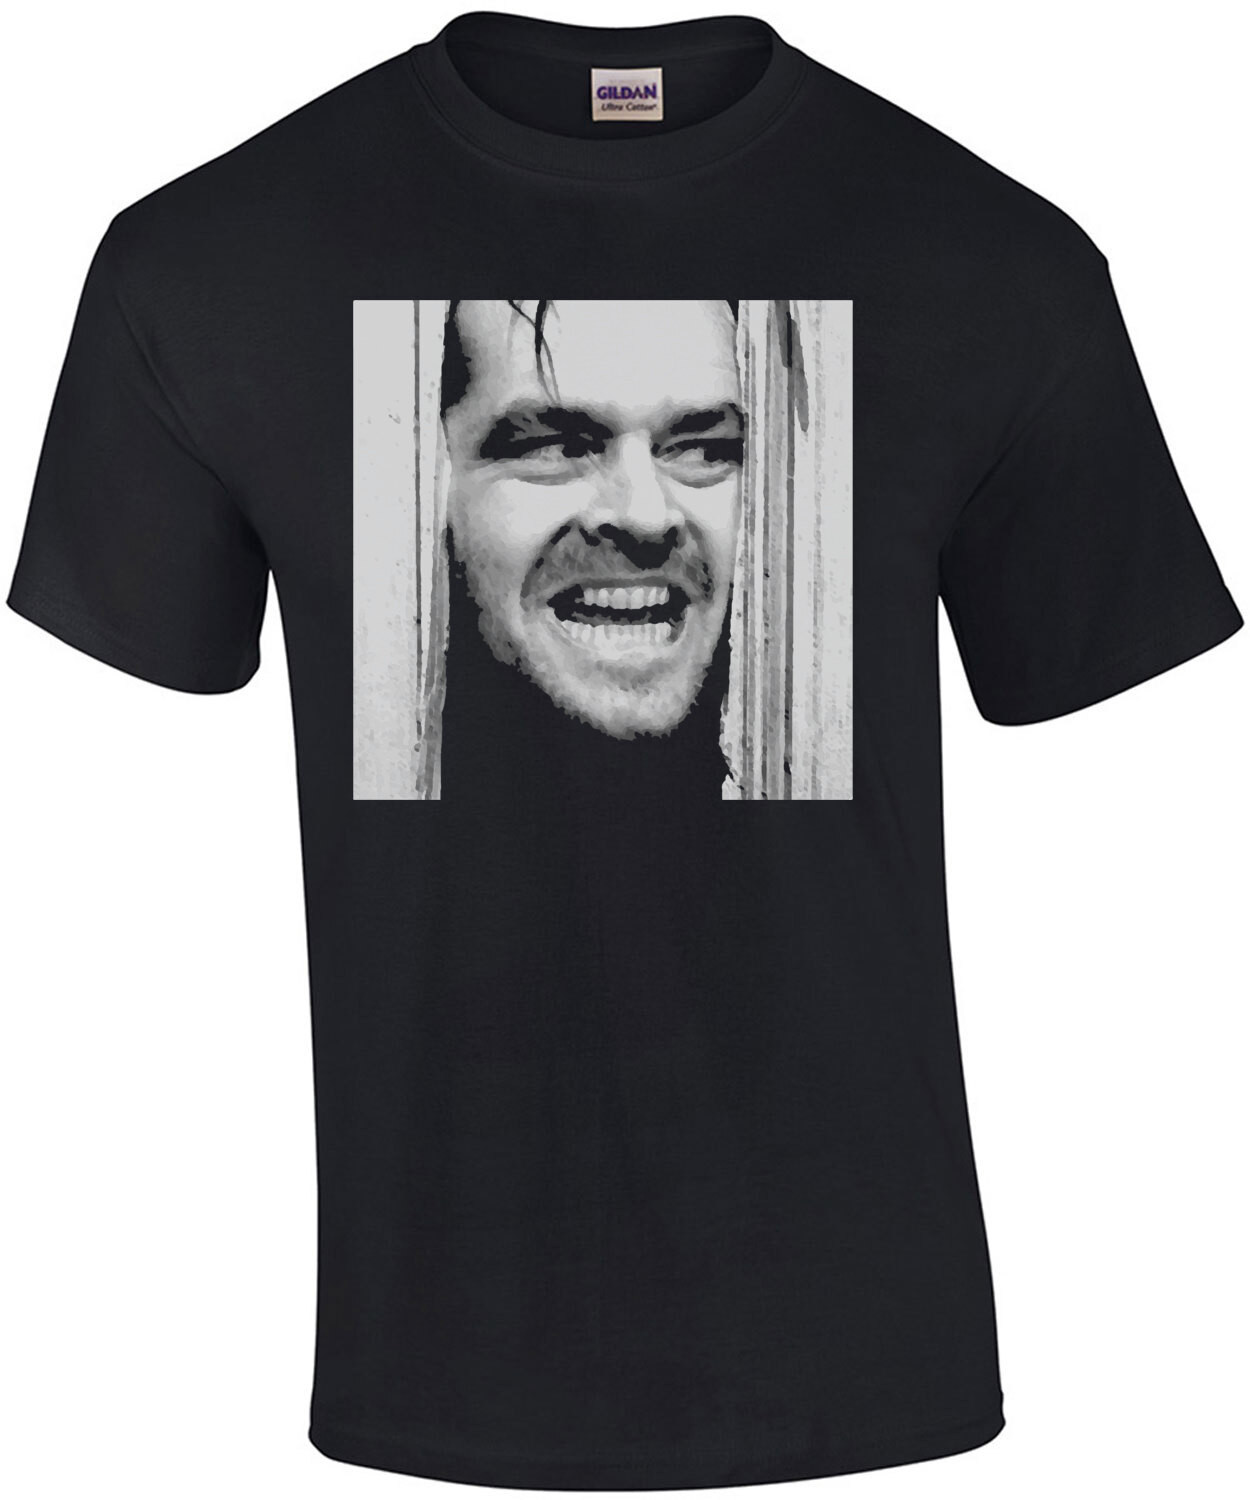 Here's Johnny - Jack Nicholson - The Shining T-Shirt